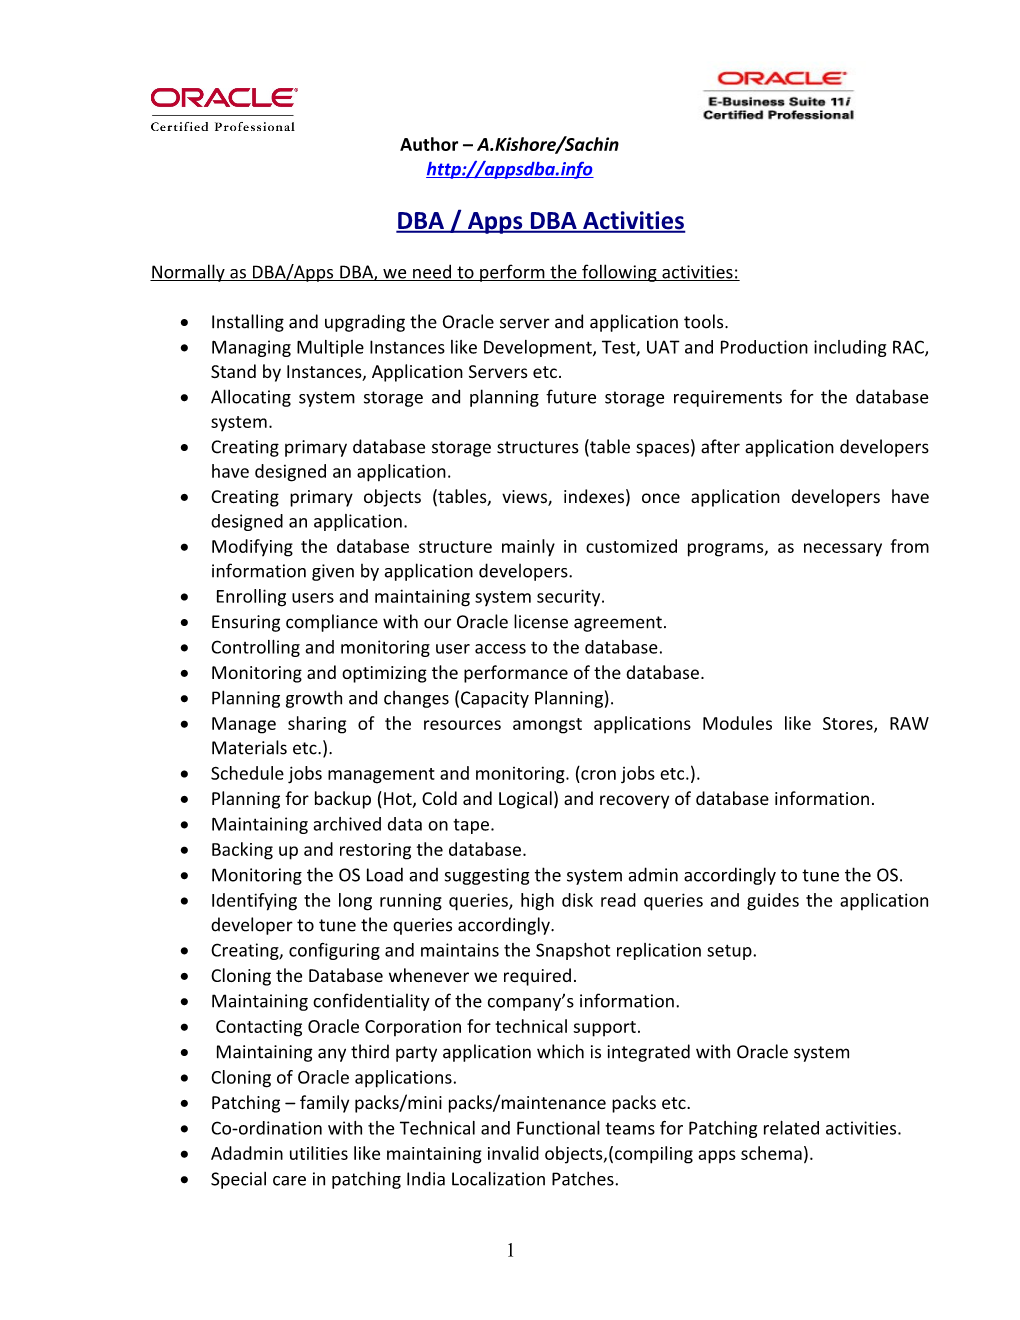 DBA / Apps DBA Activities